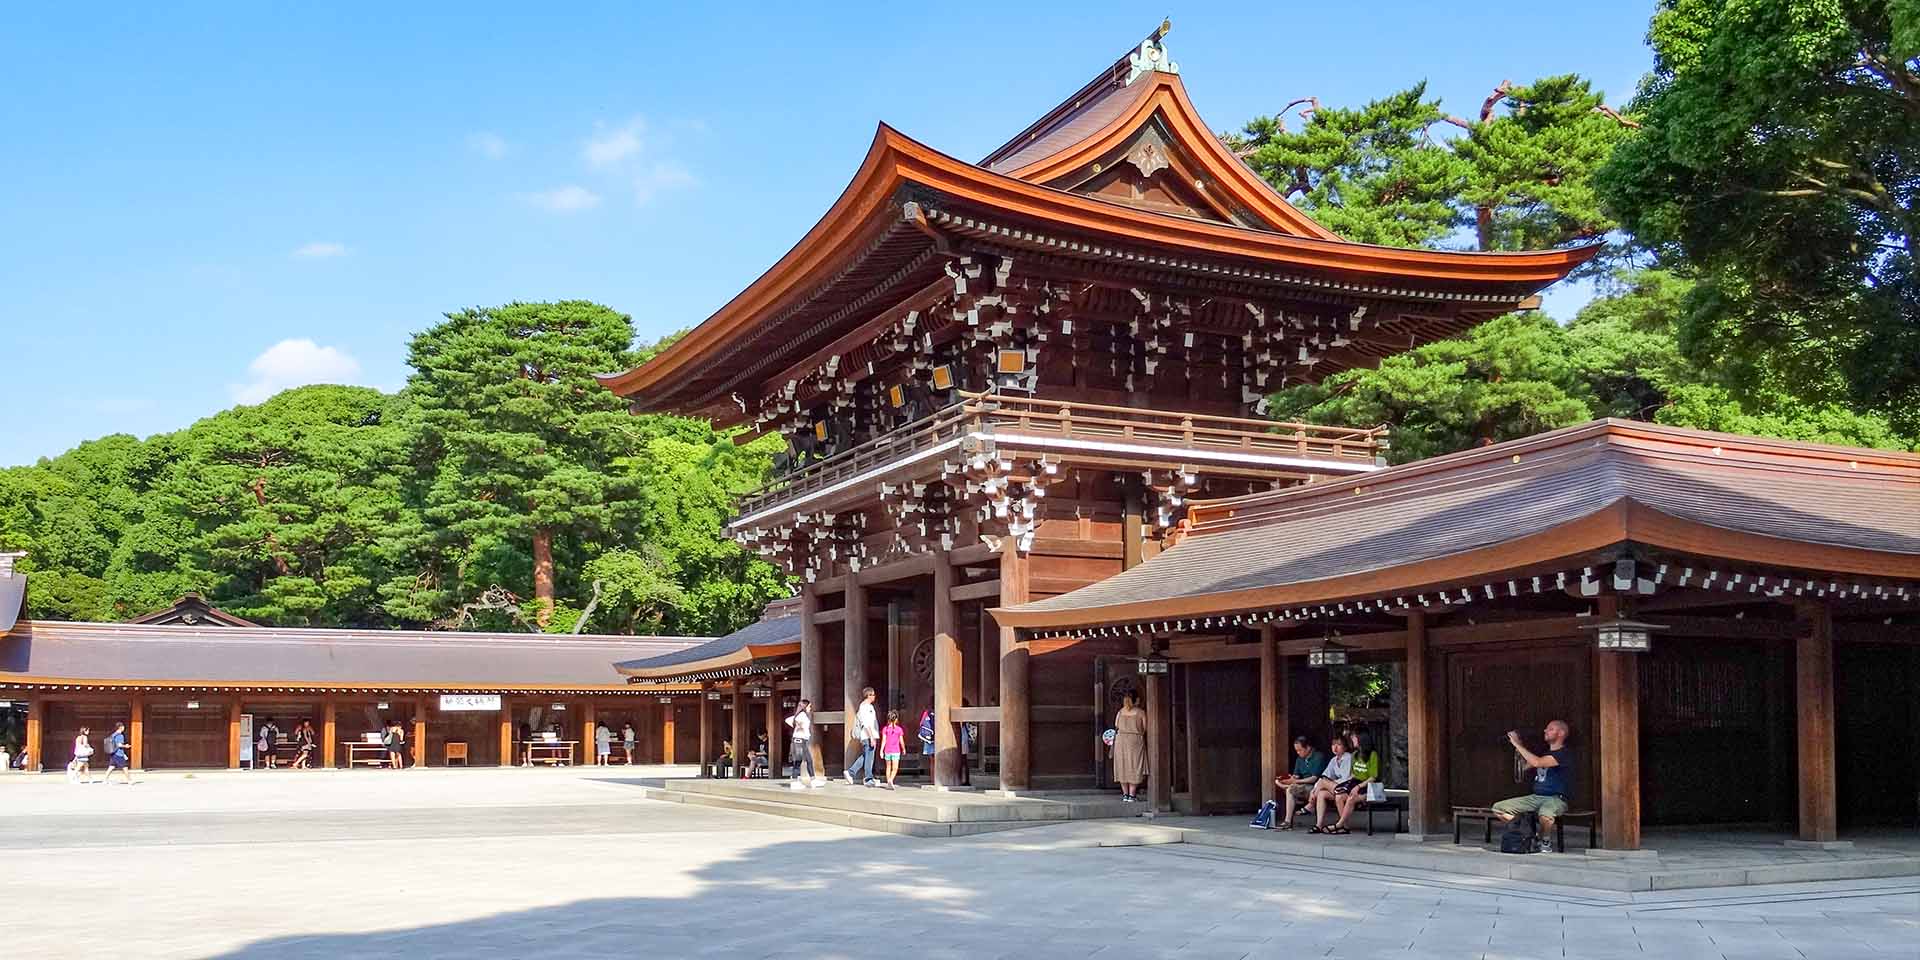 Visit the Meiji Shrine